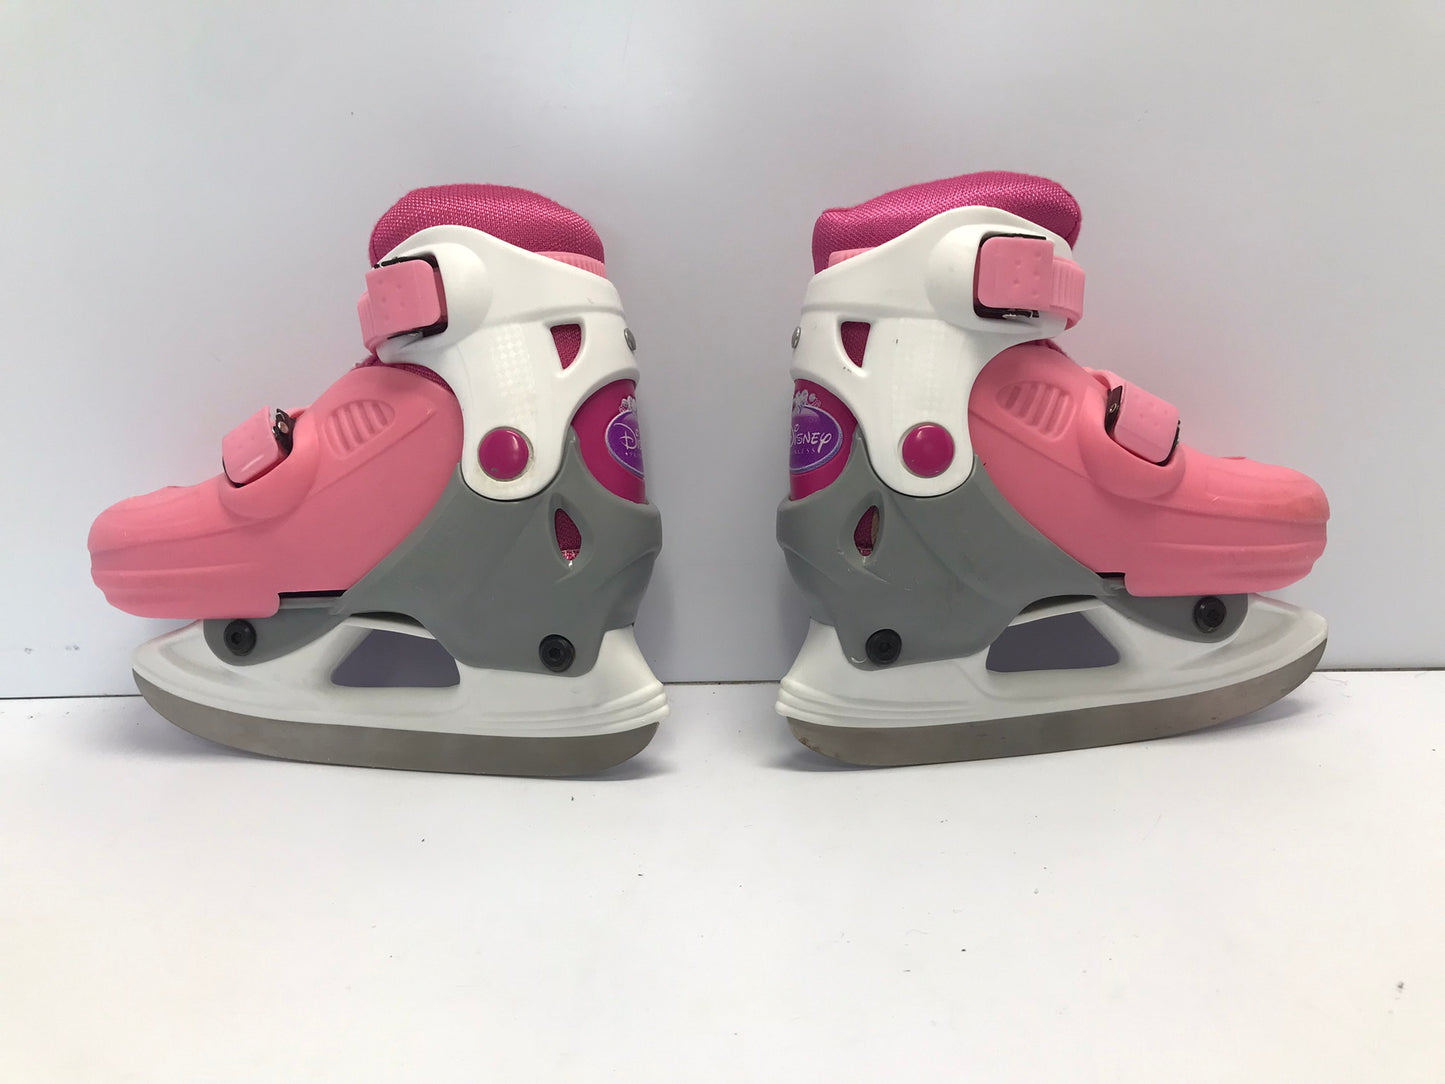 Ice Skates Child Size 9-12 Disney Lil Princess Pink Adjustable Like New